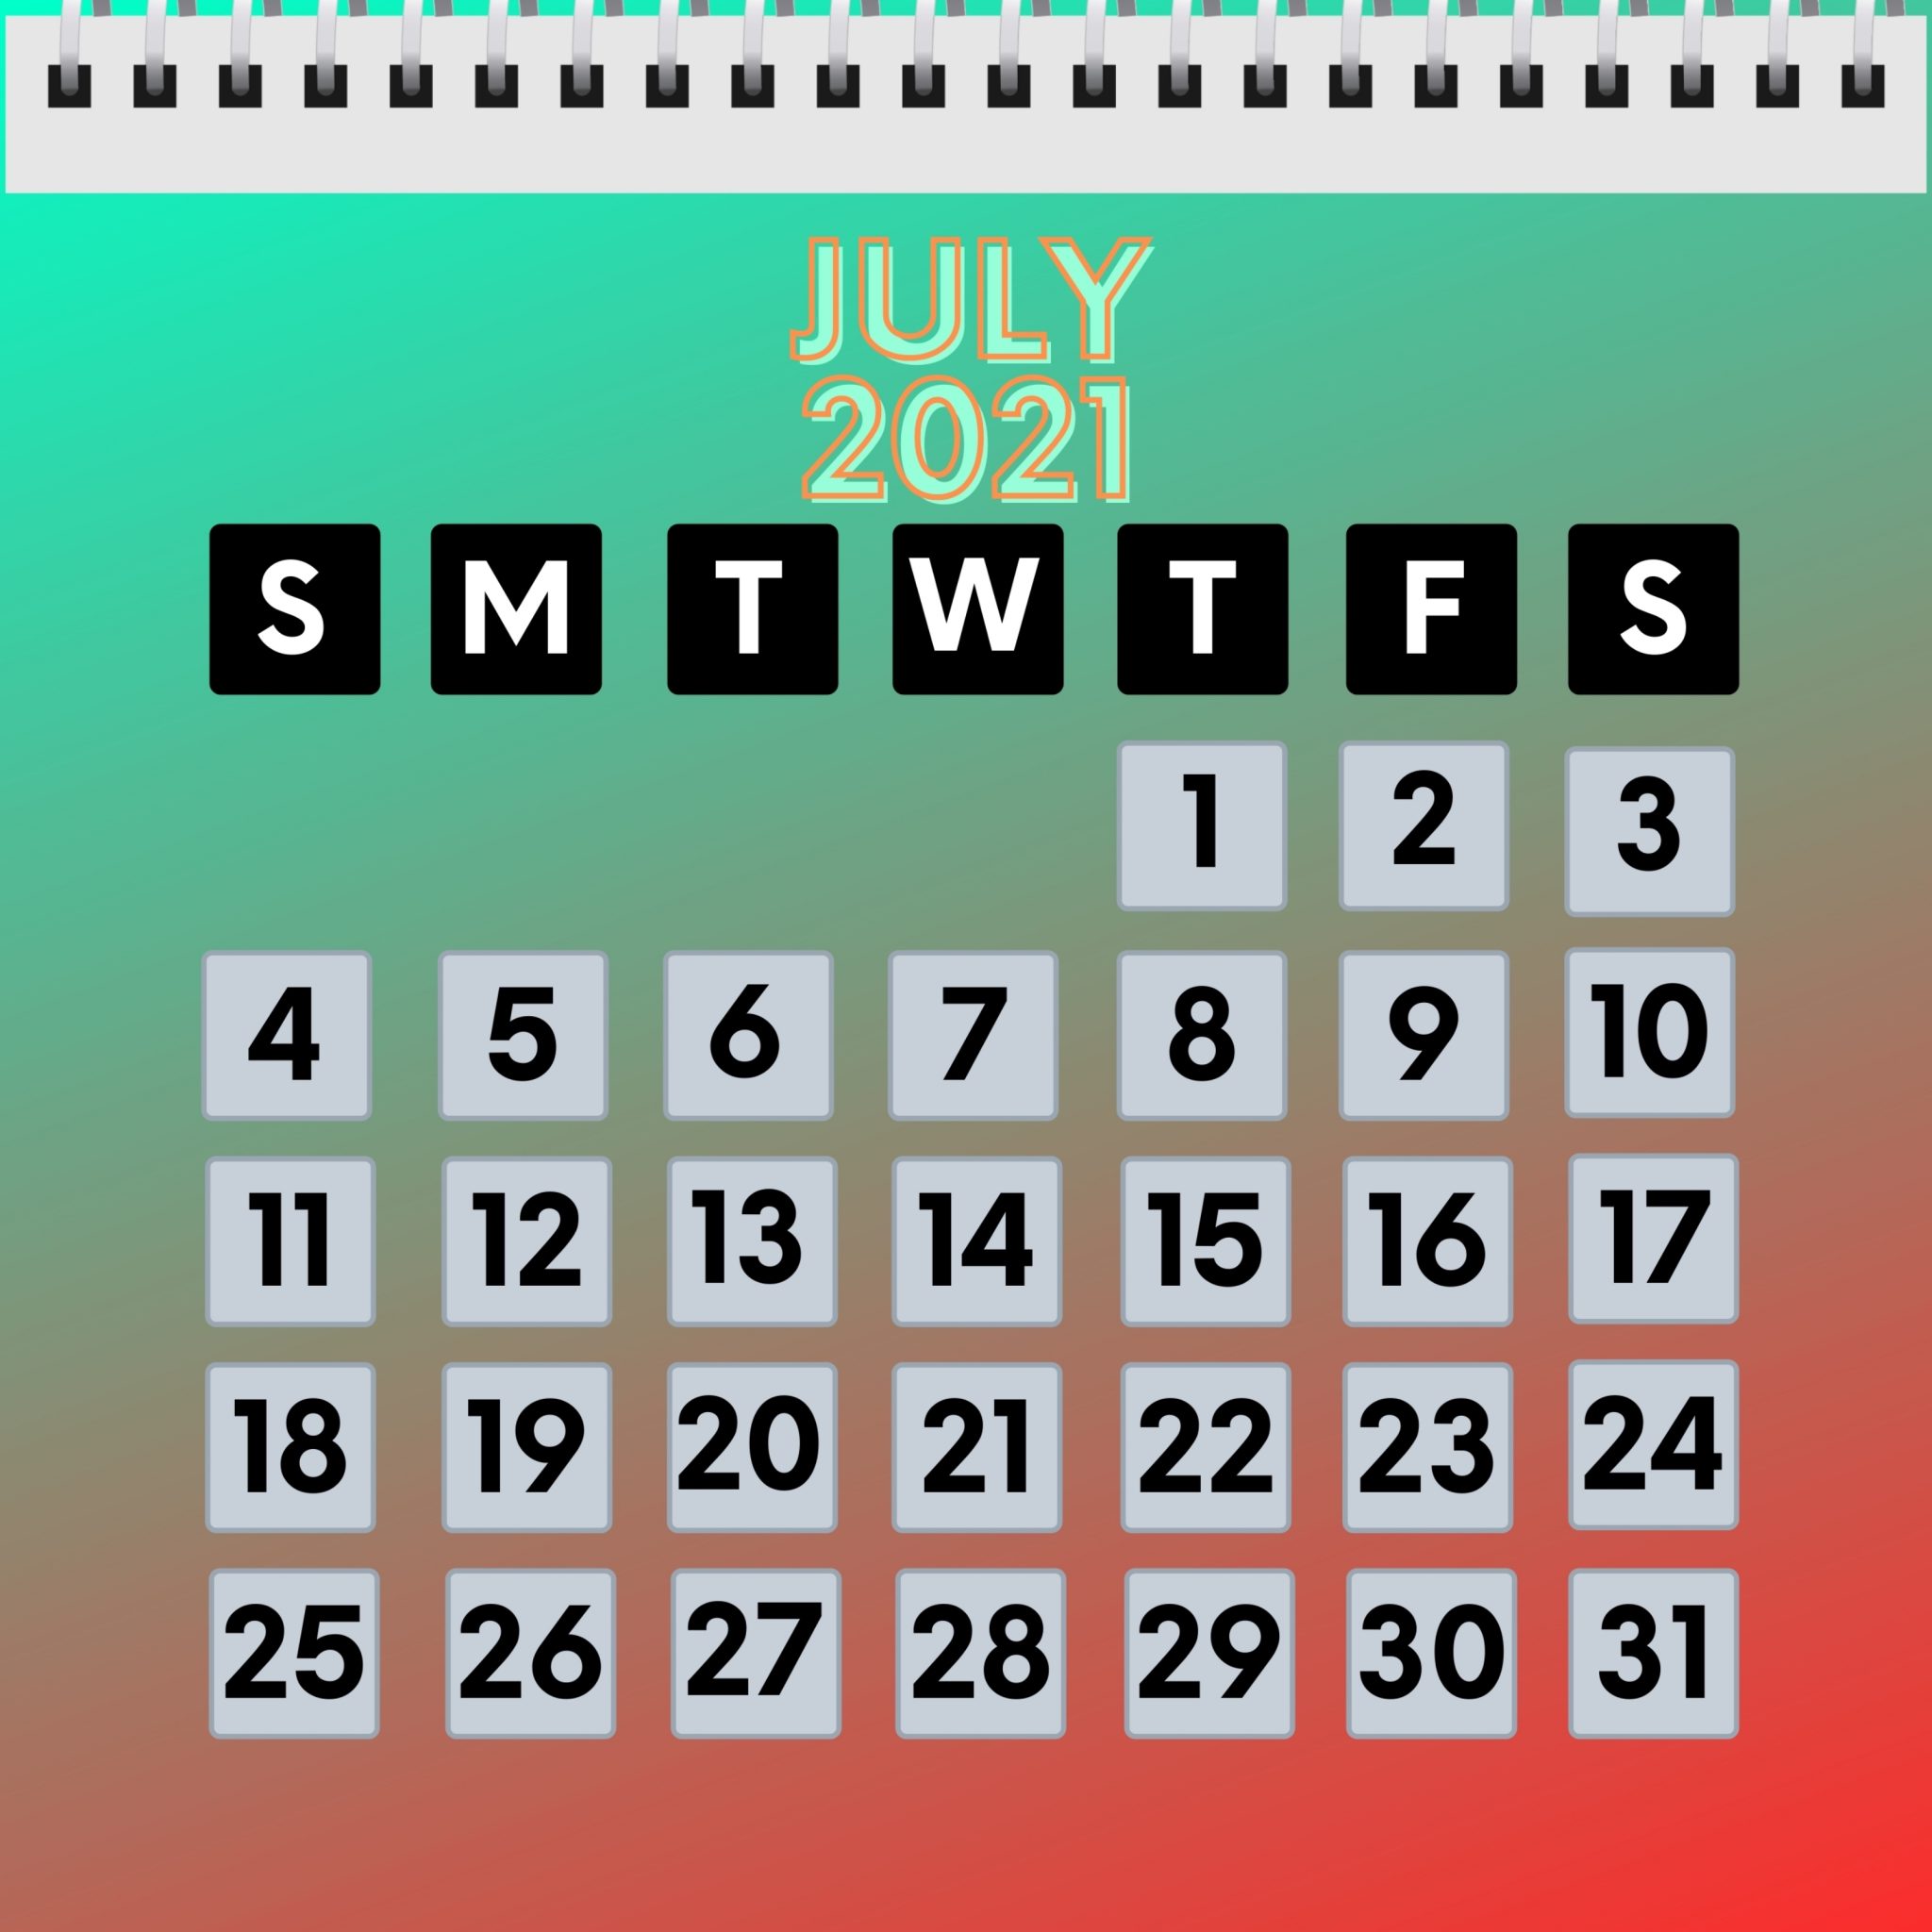 2048x2048 wallpapers iPad retina July 2021 Calendar iPad Wallpaper 2048x2048 pixels resolution